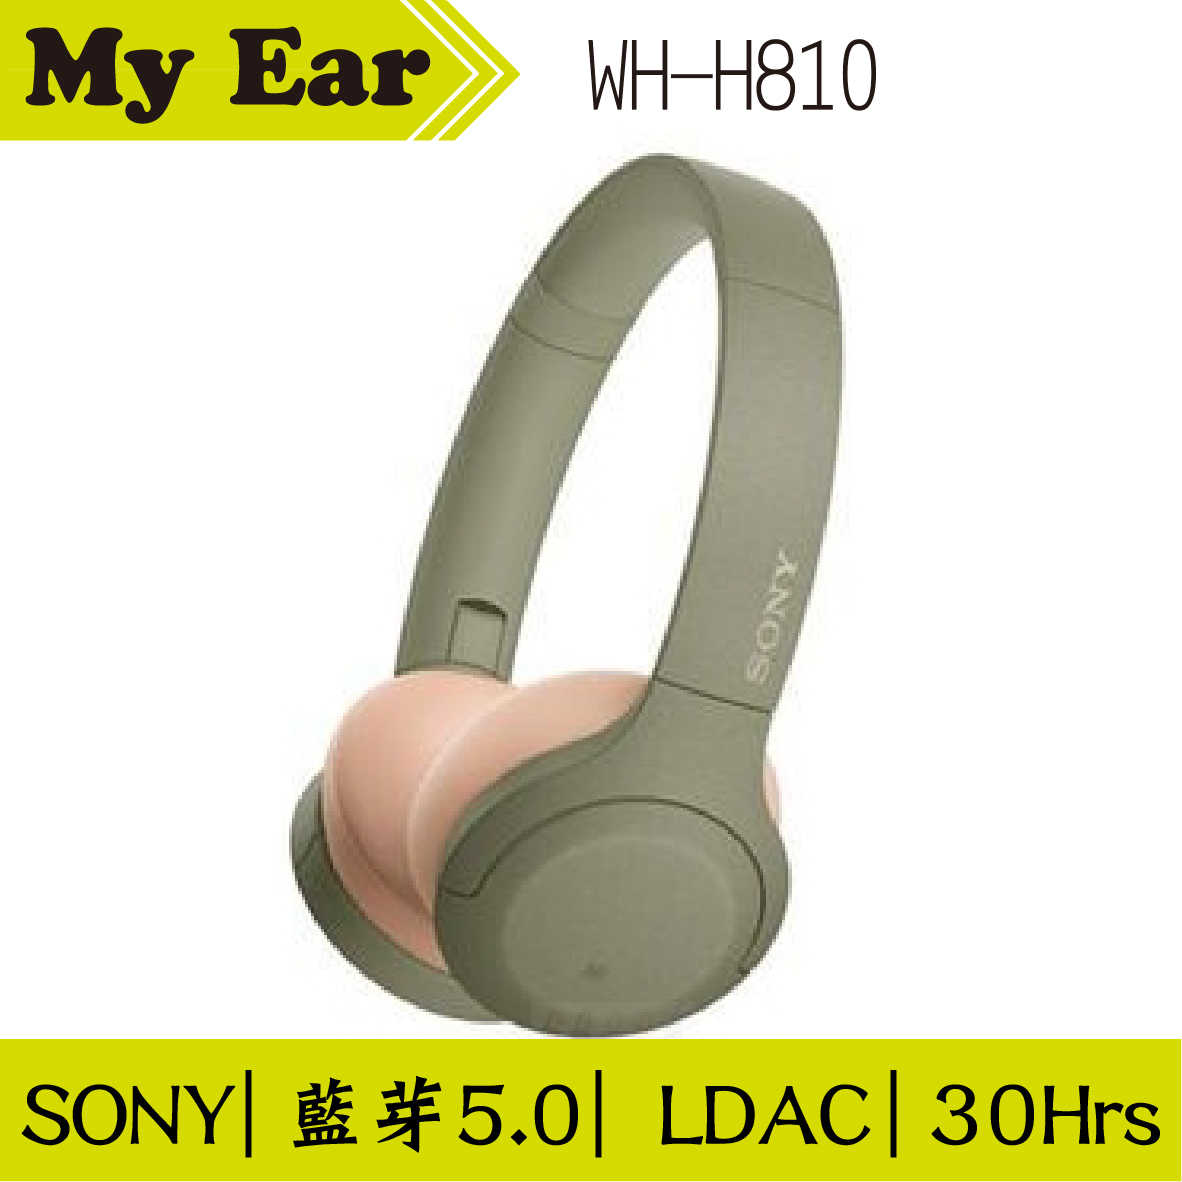 SONY WH-H810 h.ear 藍芽 耳罩式 耳機 綠色 | My Ear 耳機專門店